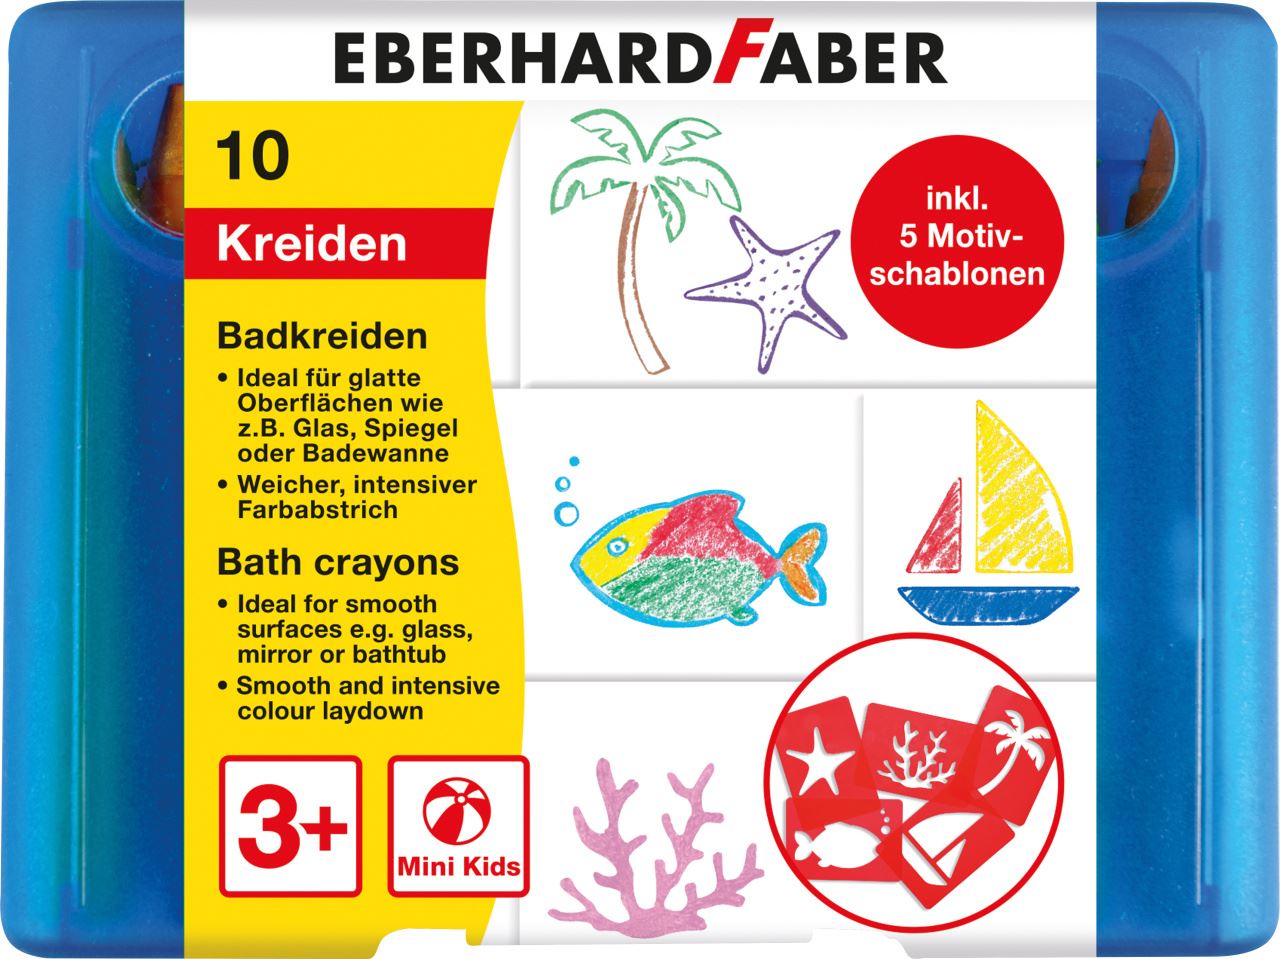 Eberhard-Faber - Bathcrayon 10 pcs incl. stencils